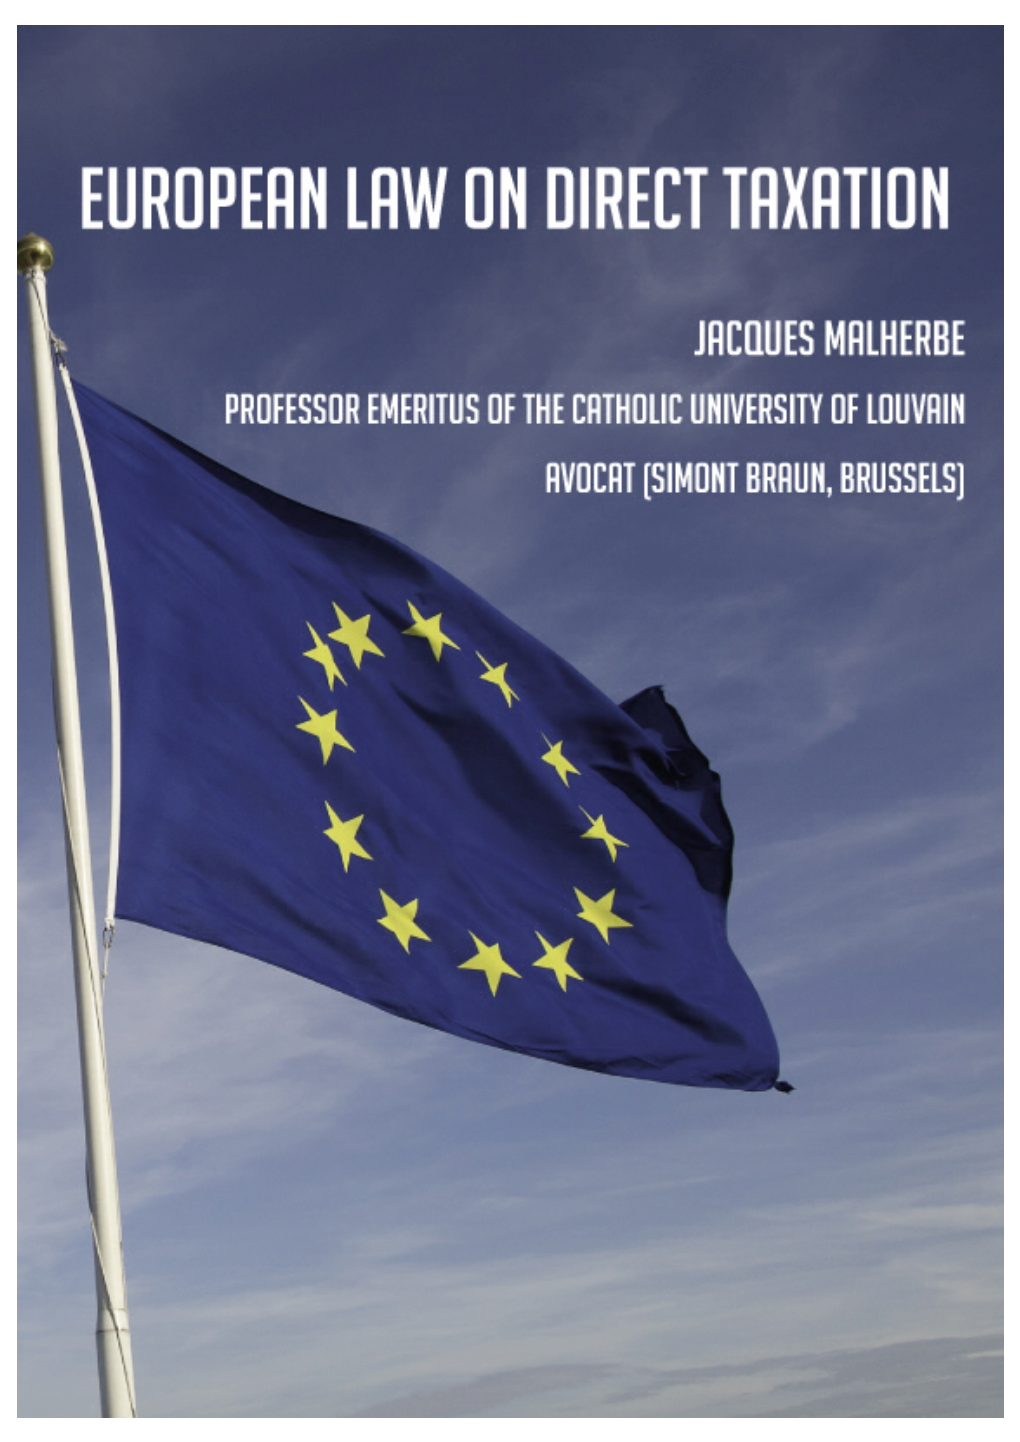 European Law on Direct Taxation, Jacques Malherbe, Professor